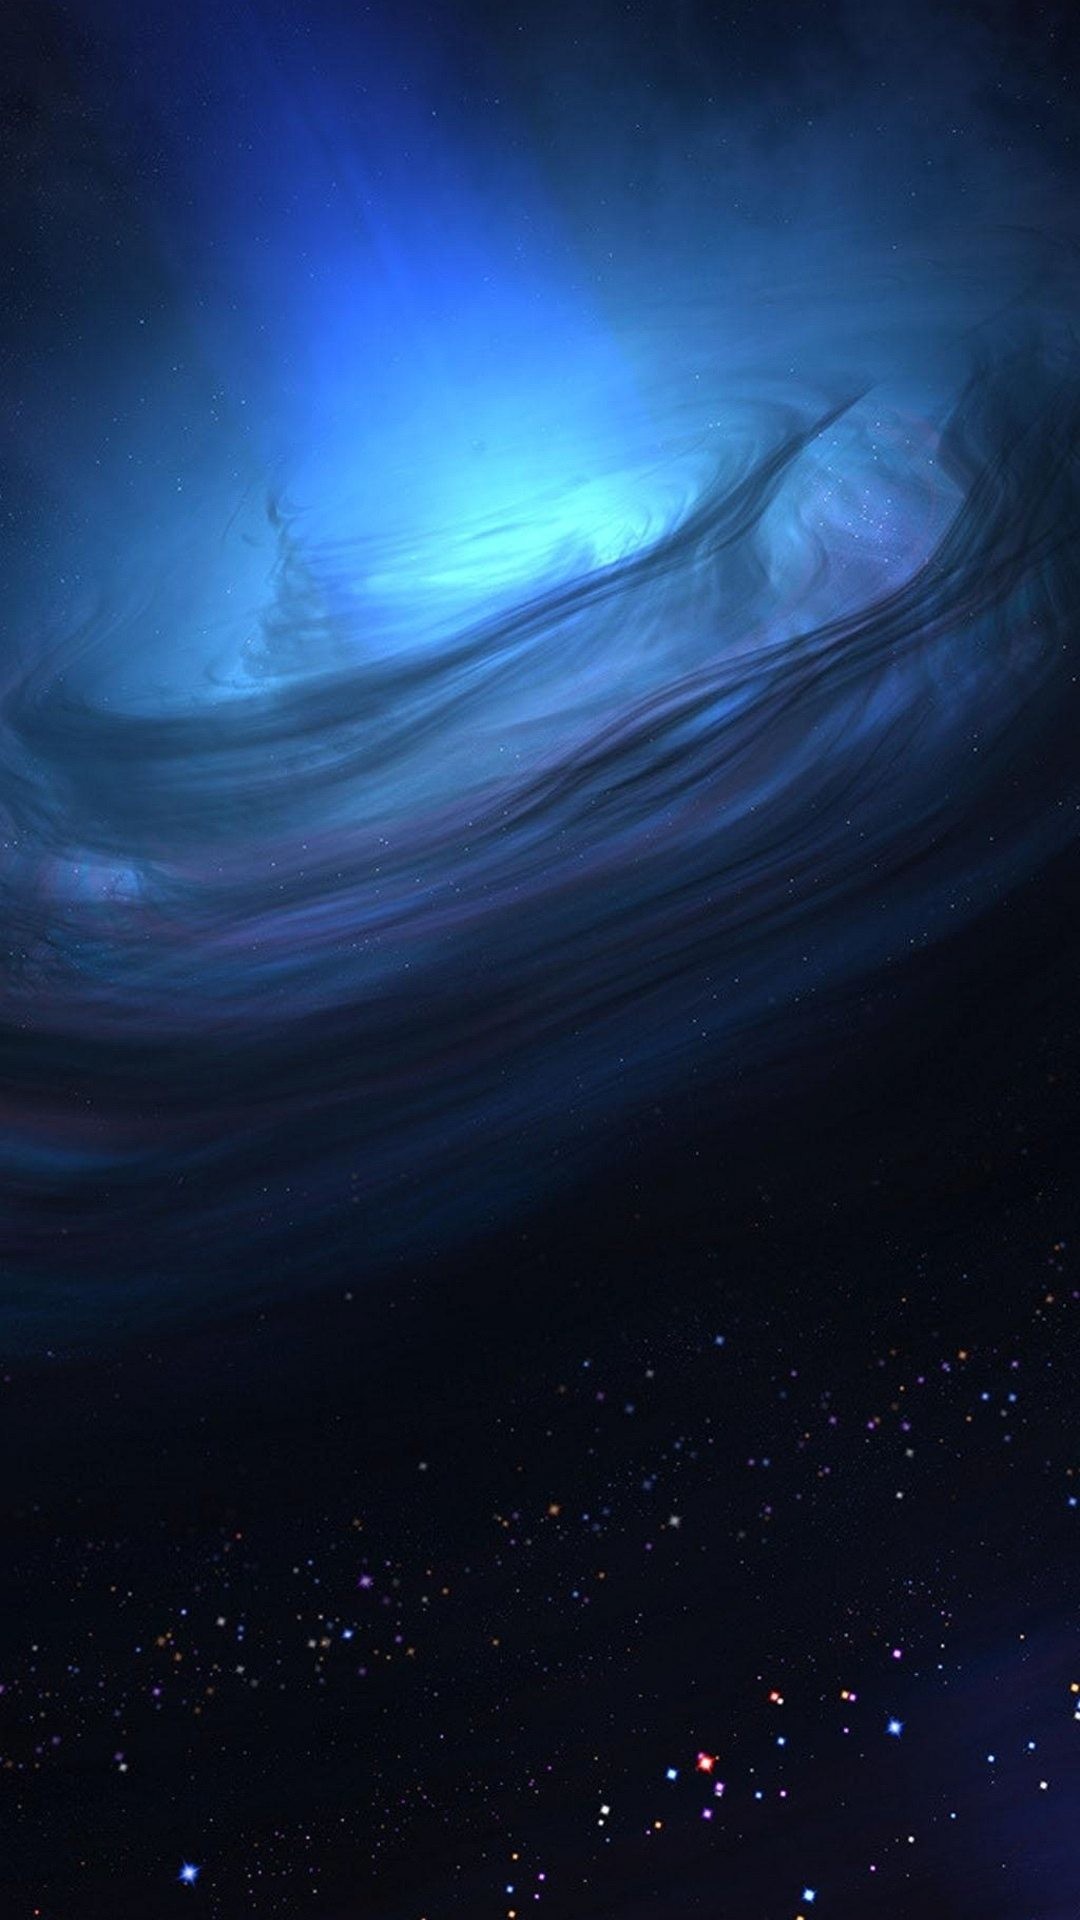 1080x1920 Wallpaper full hd 1080 x 1920 smartphone nebula galaxy space blue